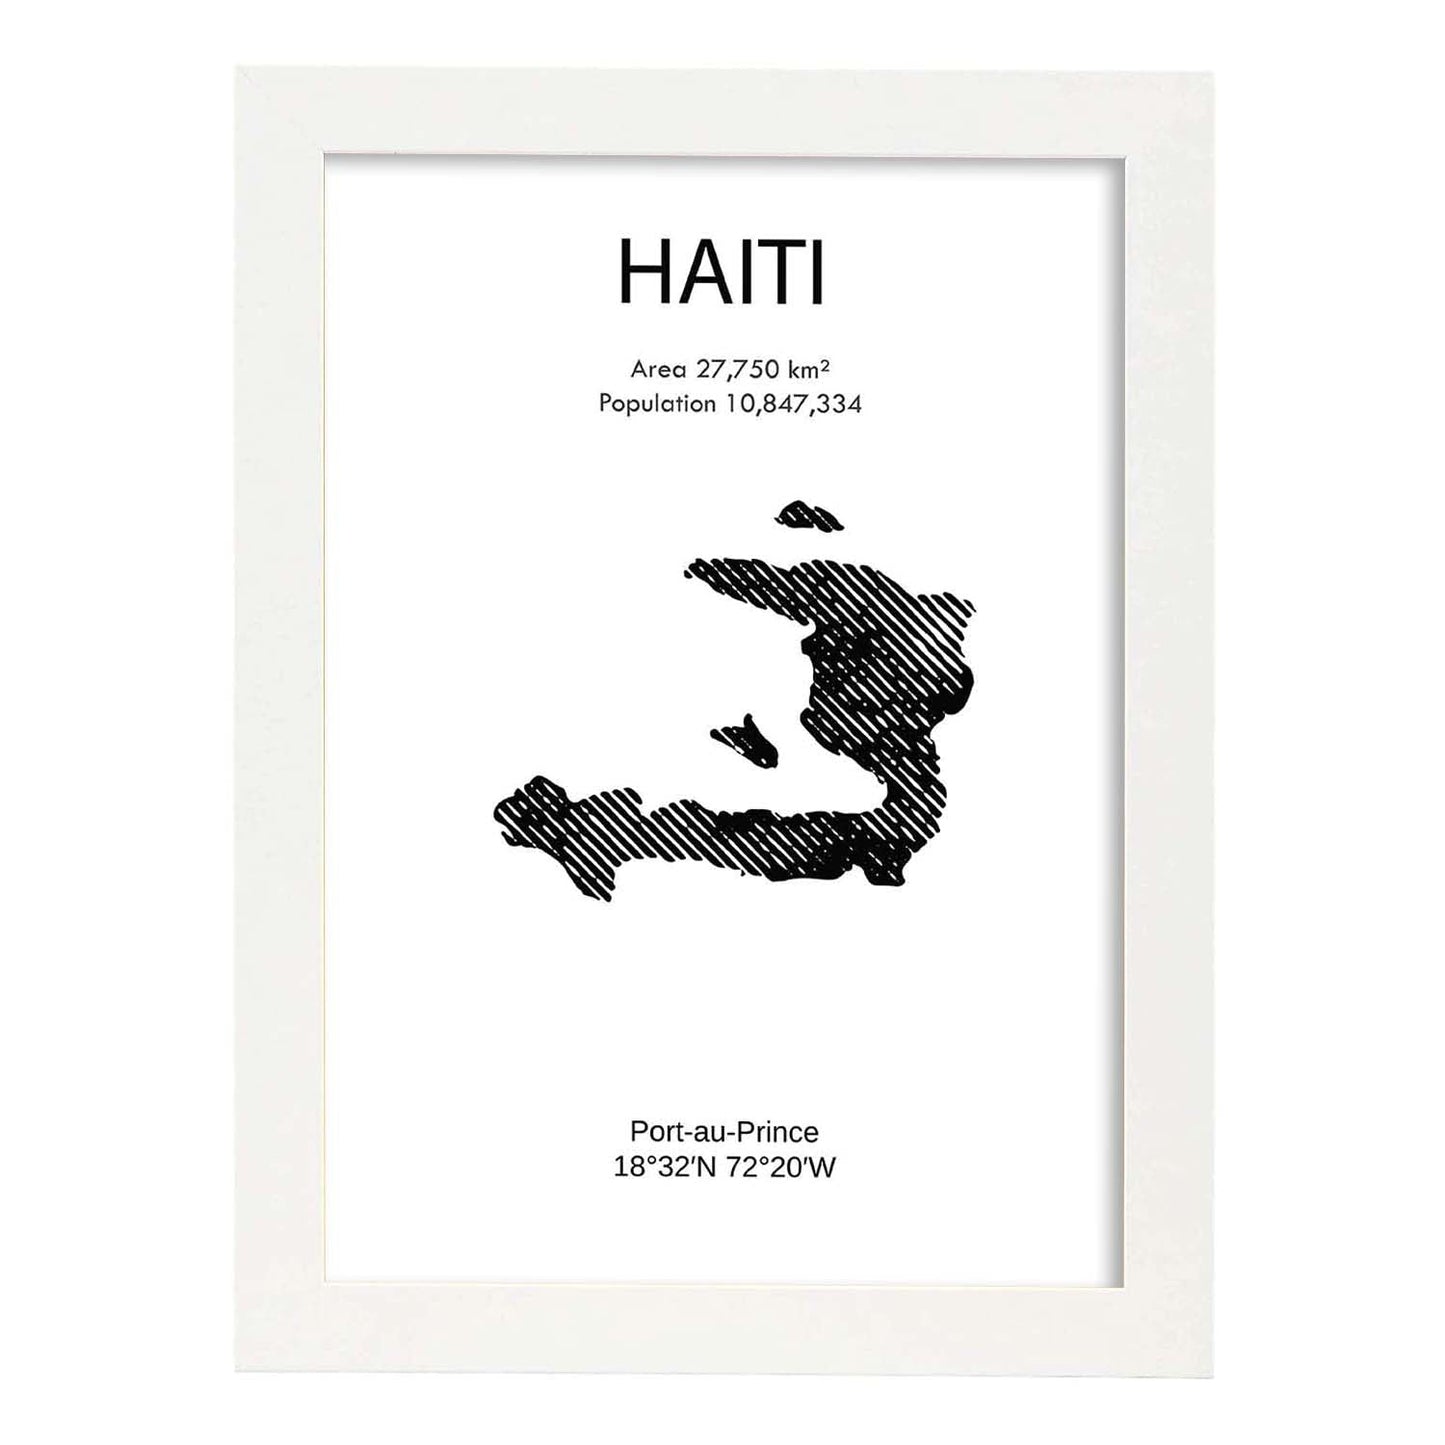 Poster de Haiti. Láminas de paises y continentes del mundo.-Artwork-Nacnic-A3-Marco Blanco-Nacnic Estudio SL